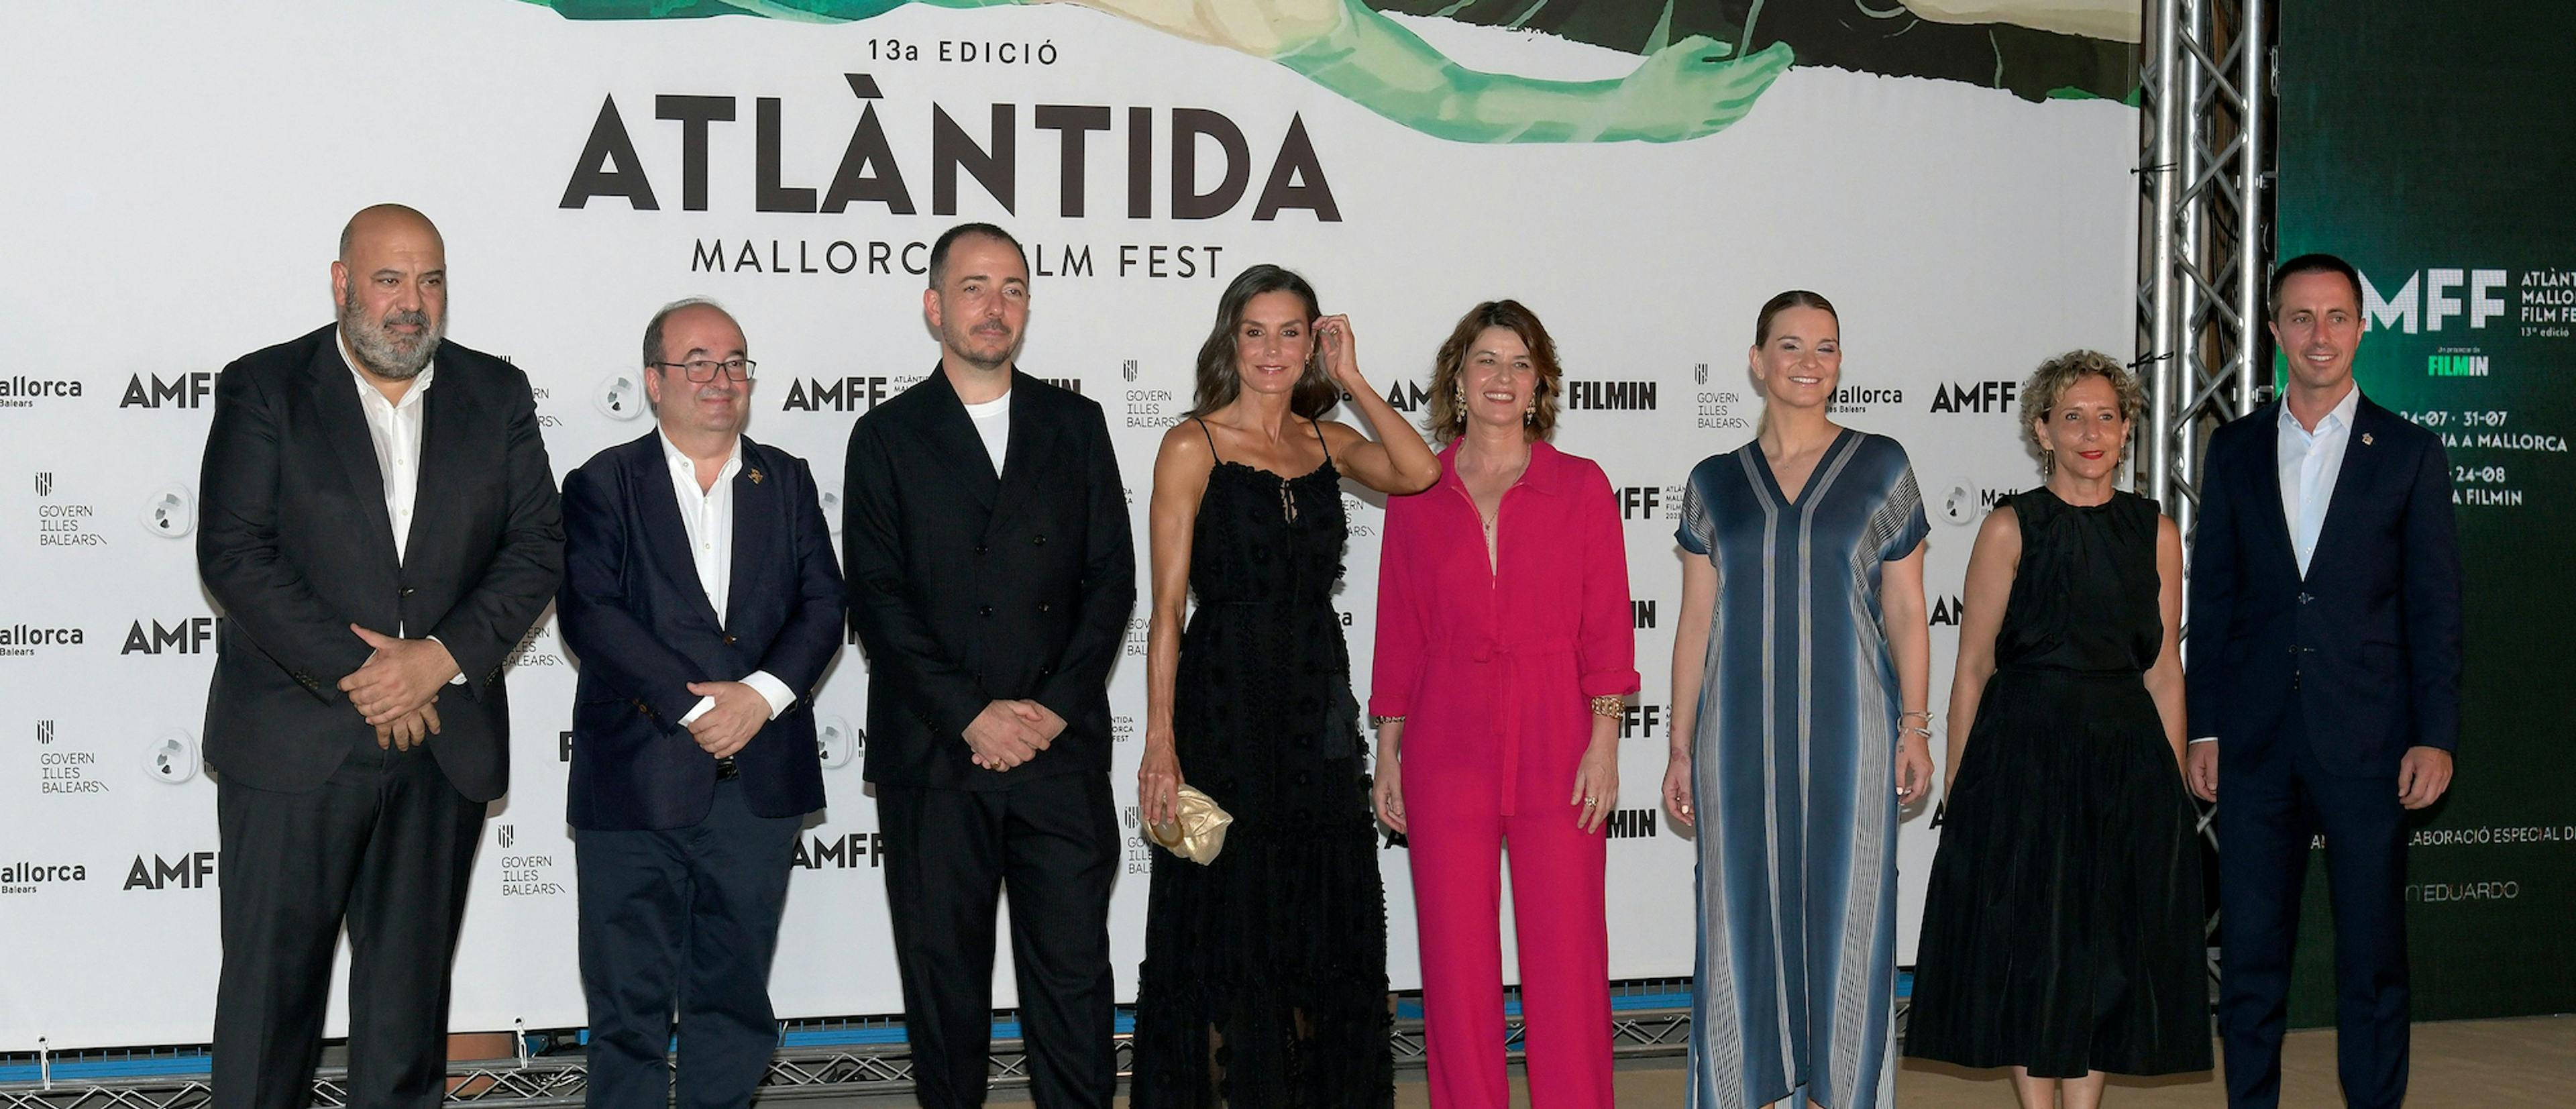 La reina Letizia, Jaume Ripoll, la actriz Irène Jacob y el resto de autoridades en la clausura del Atlàntida Mallorca Film Fest